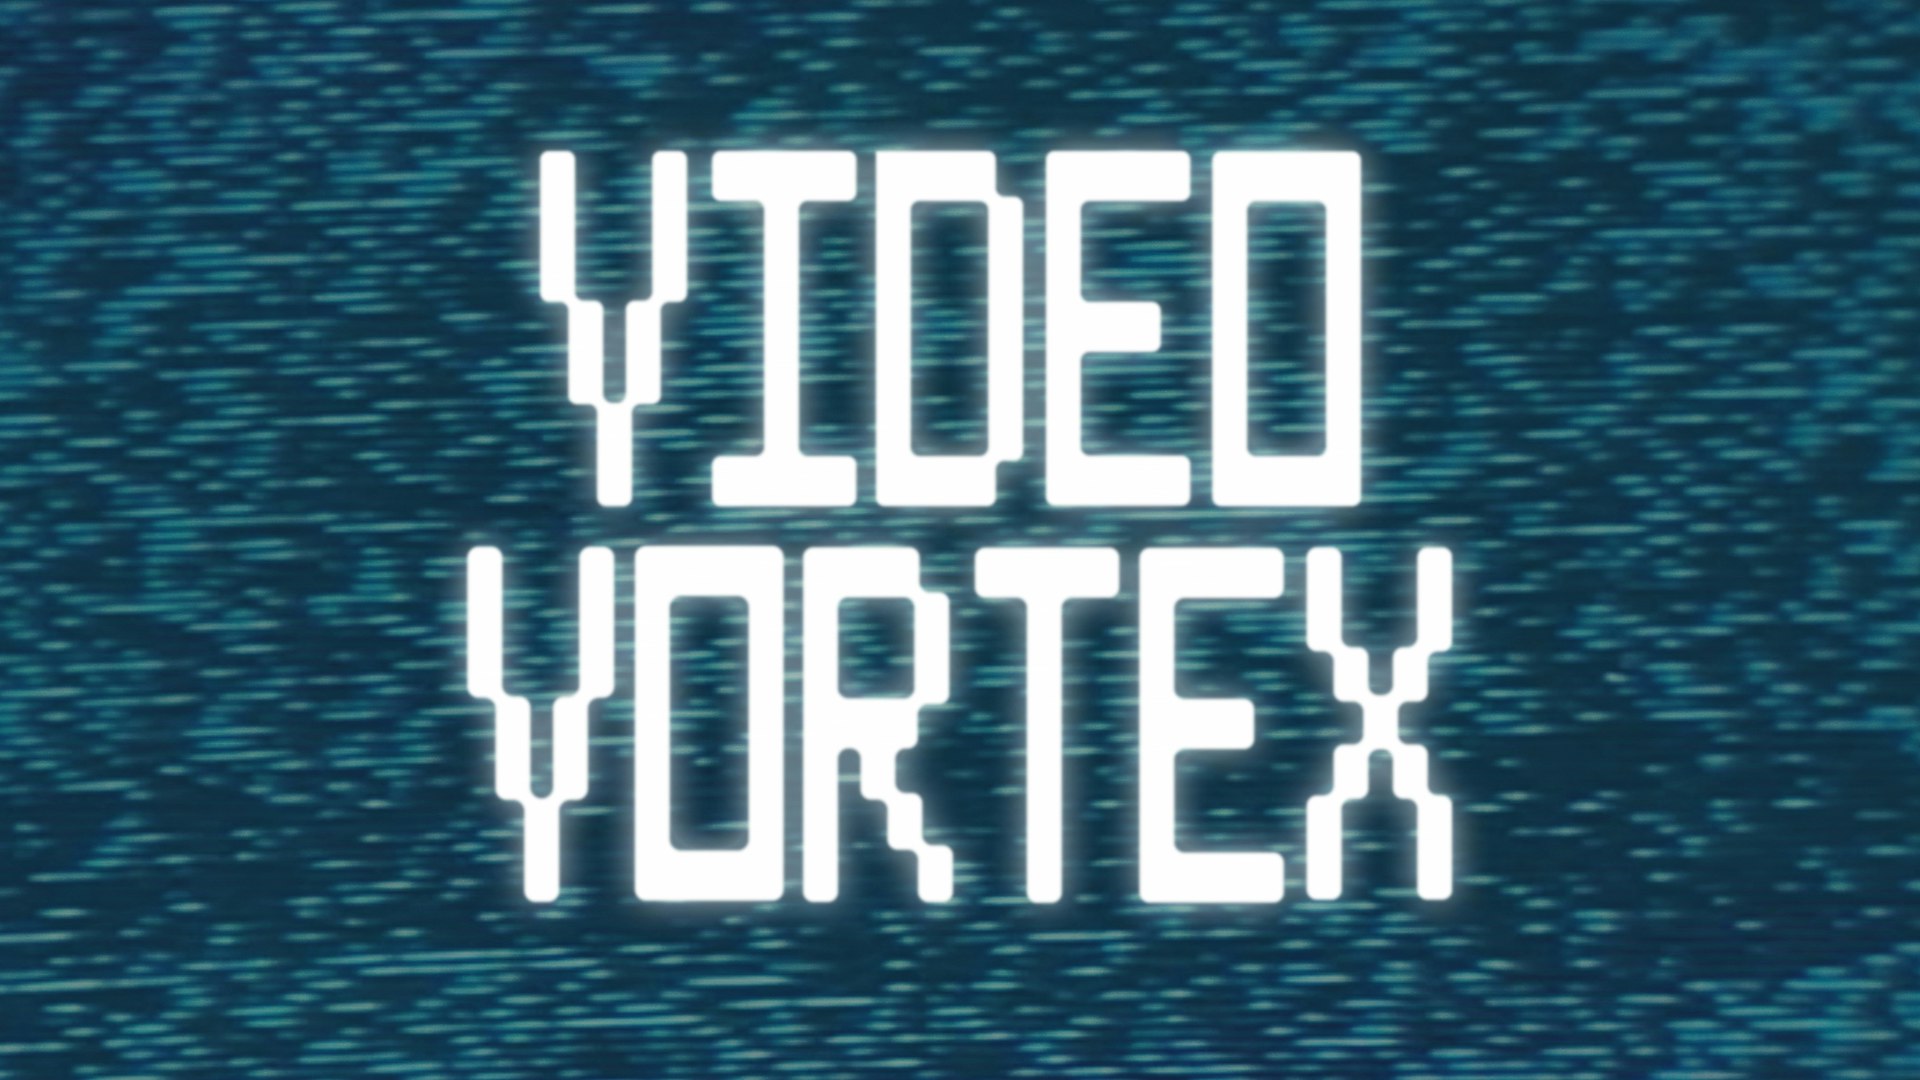 Video Vortex  Alamo Drafthouse Cinema